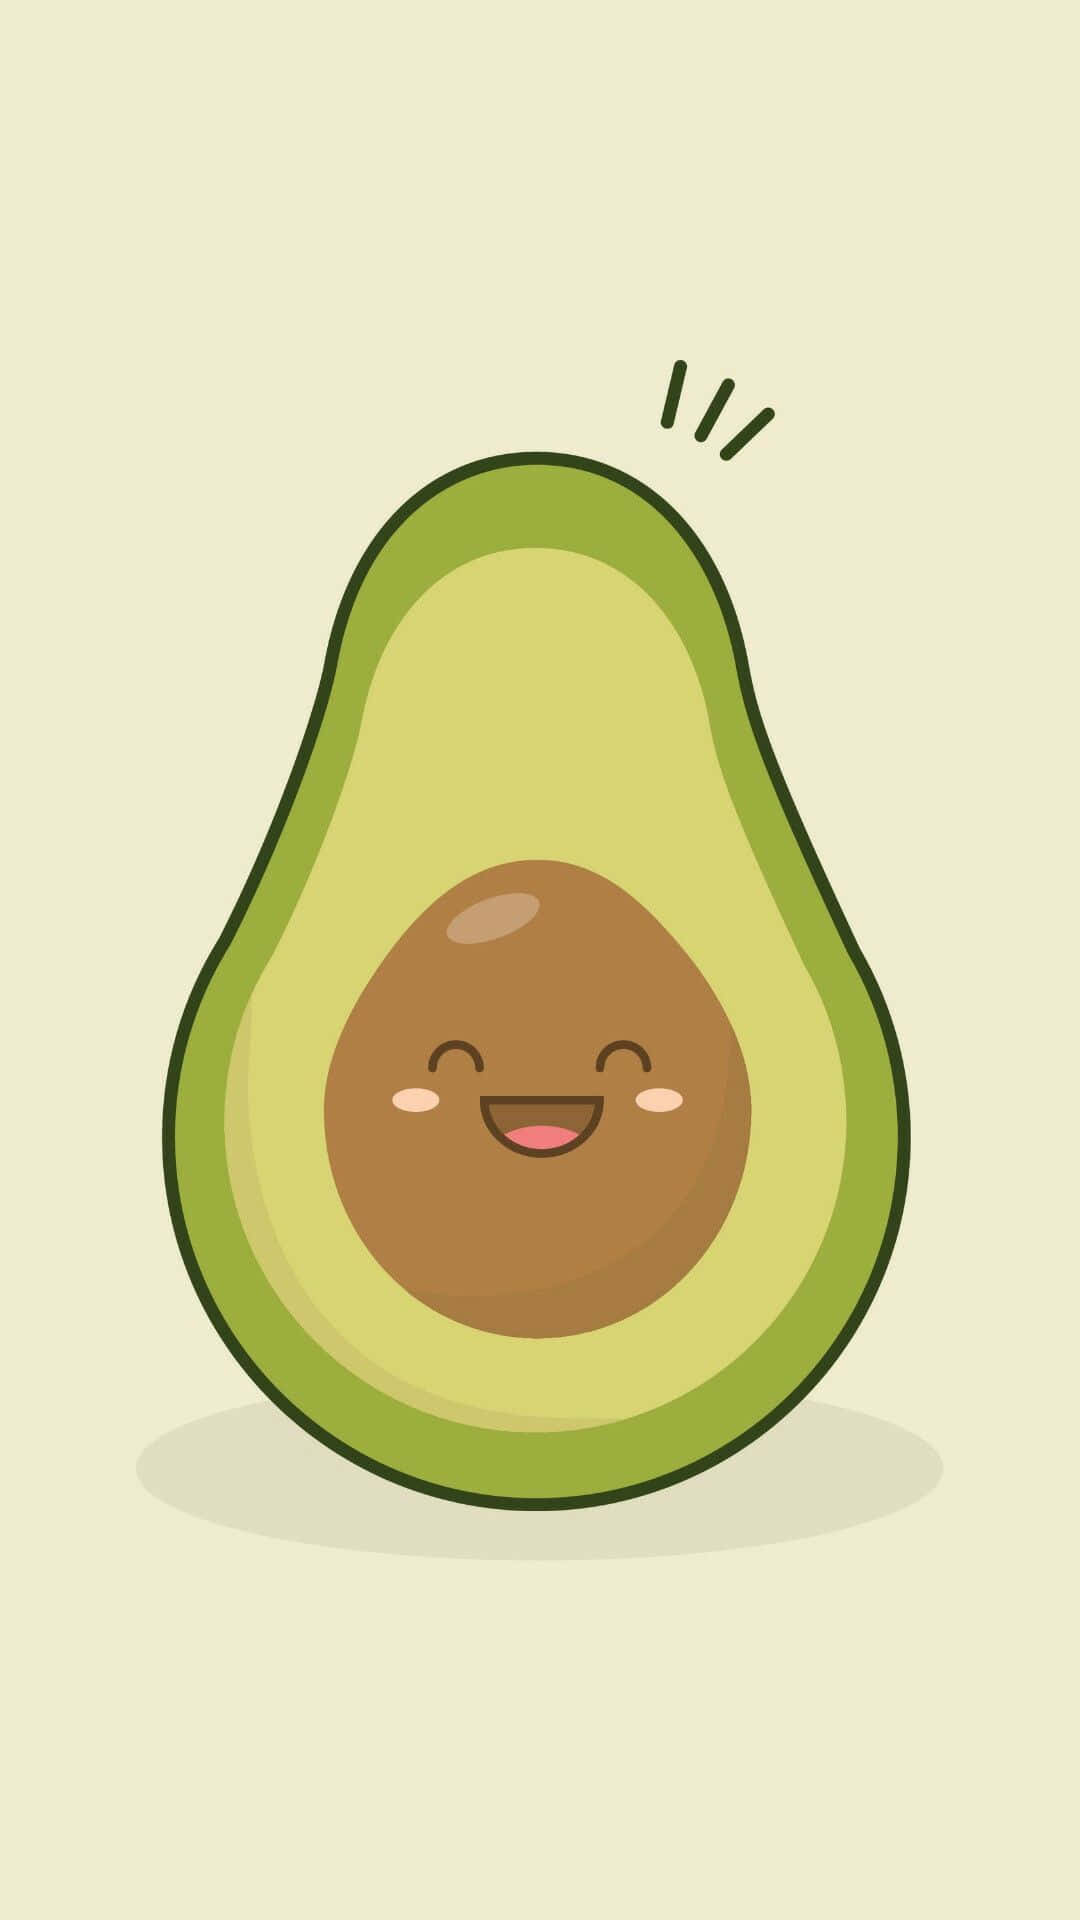 Tải xuống APK Cute Avocado Wallpaper cho Android